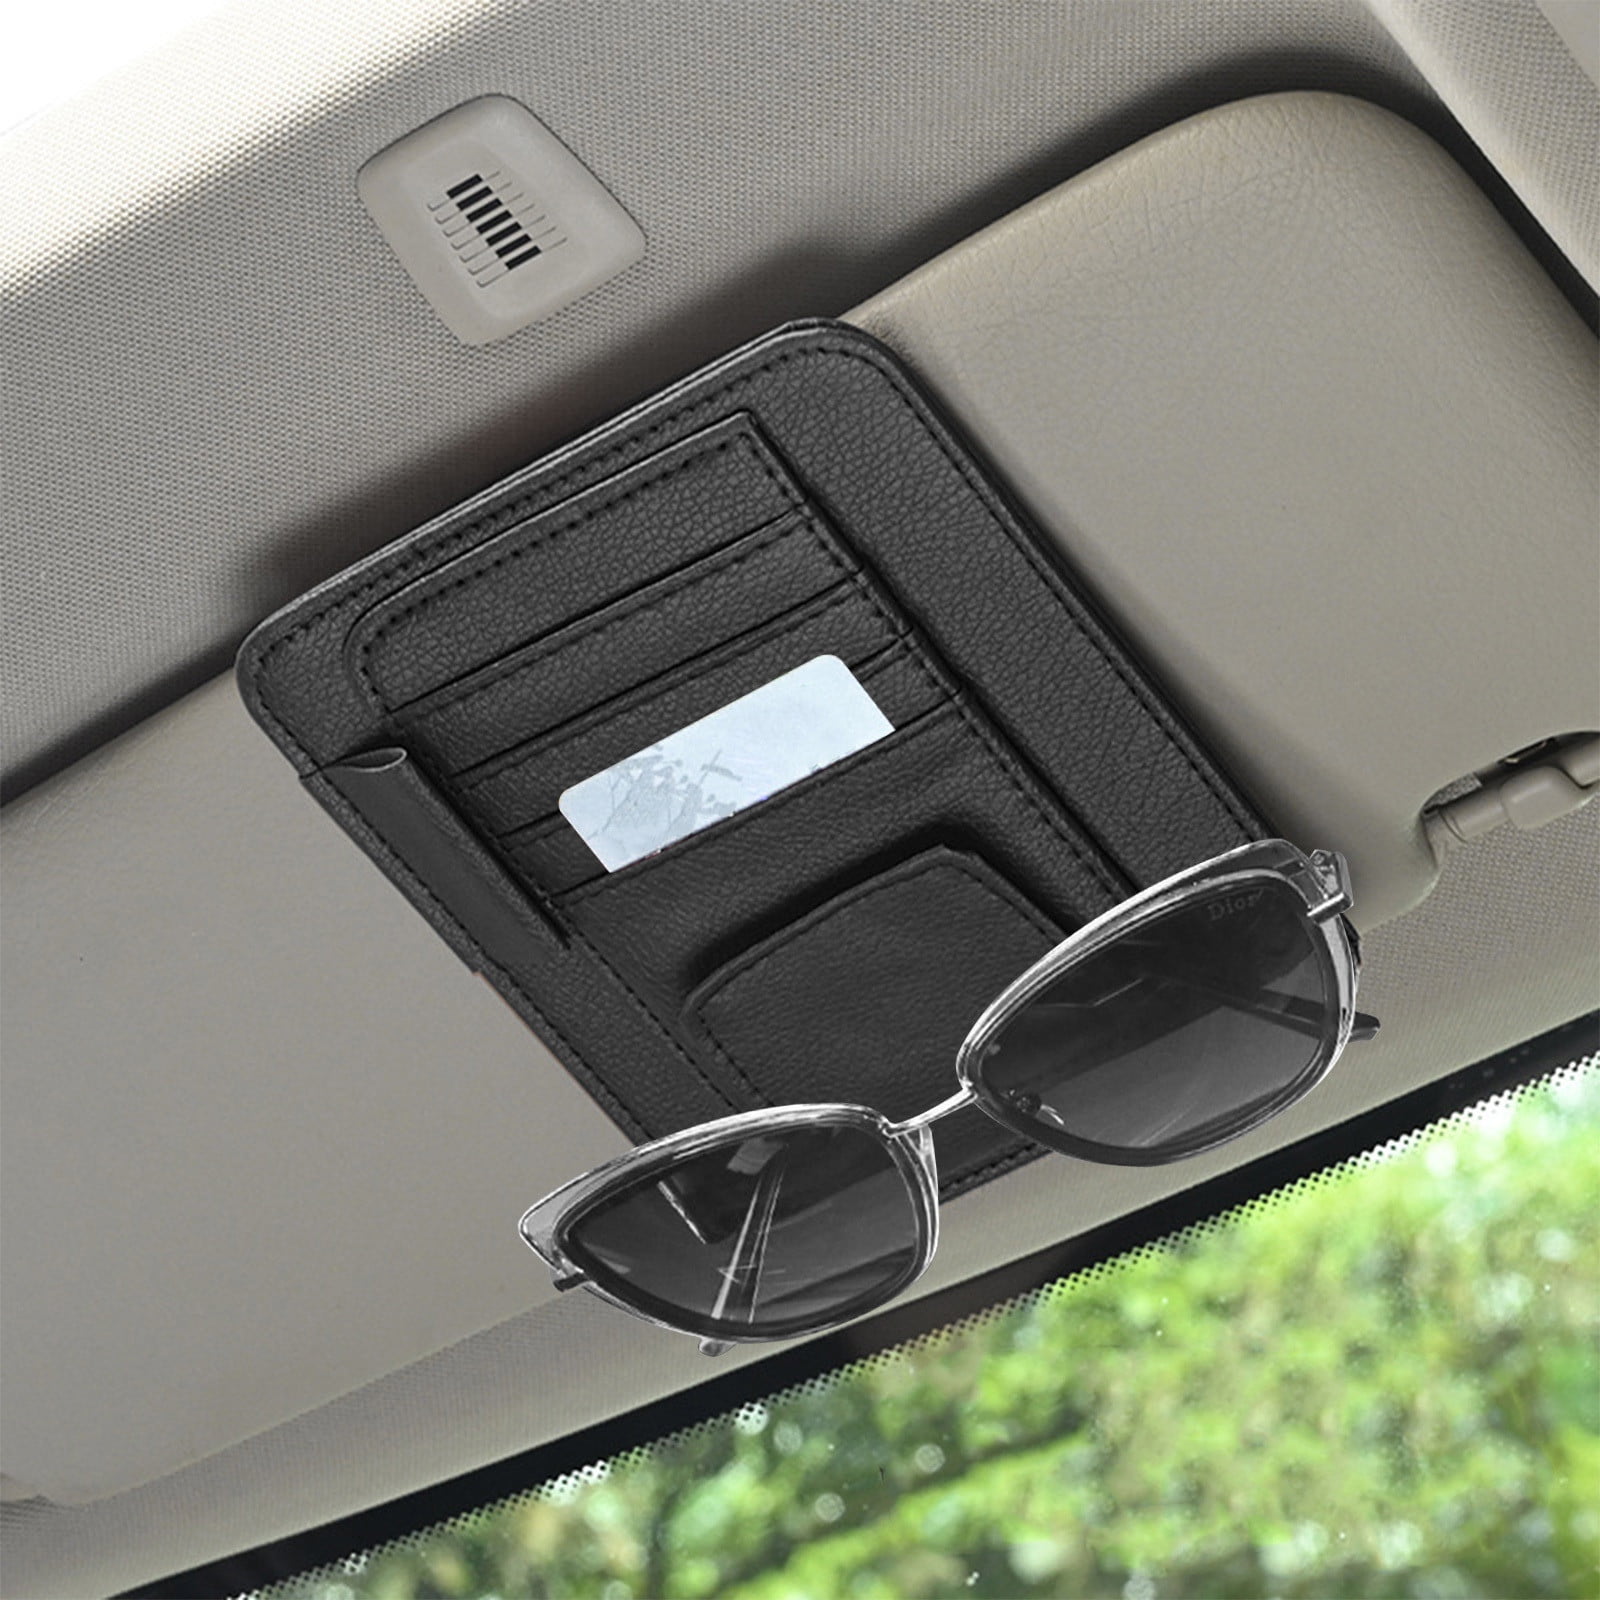 Sunglass Holder For Car,Leather Car Sunglass Holder,Magnet Sunglass Clip  For Car Visor,Multiple Sunglasses Holder For Car,Visor Sunglass Holder Up  to 65% off 